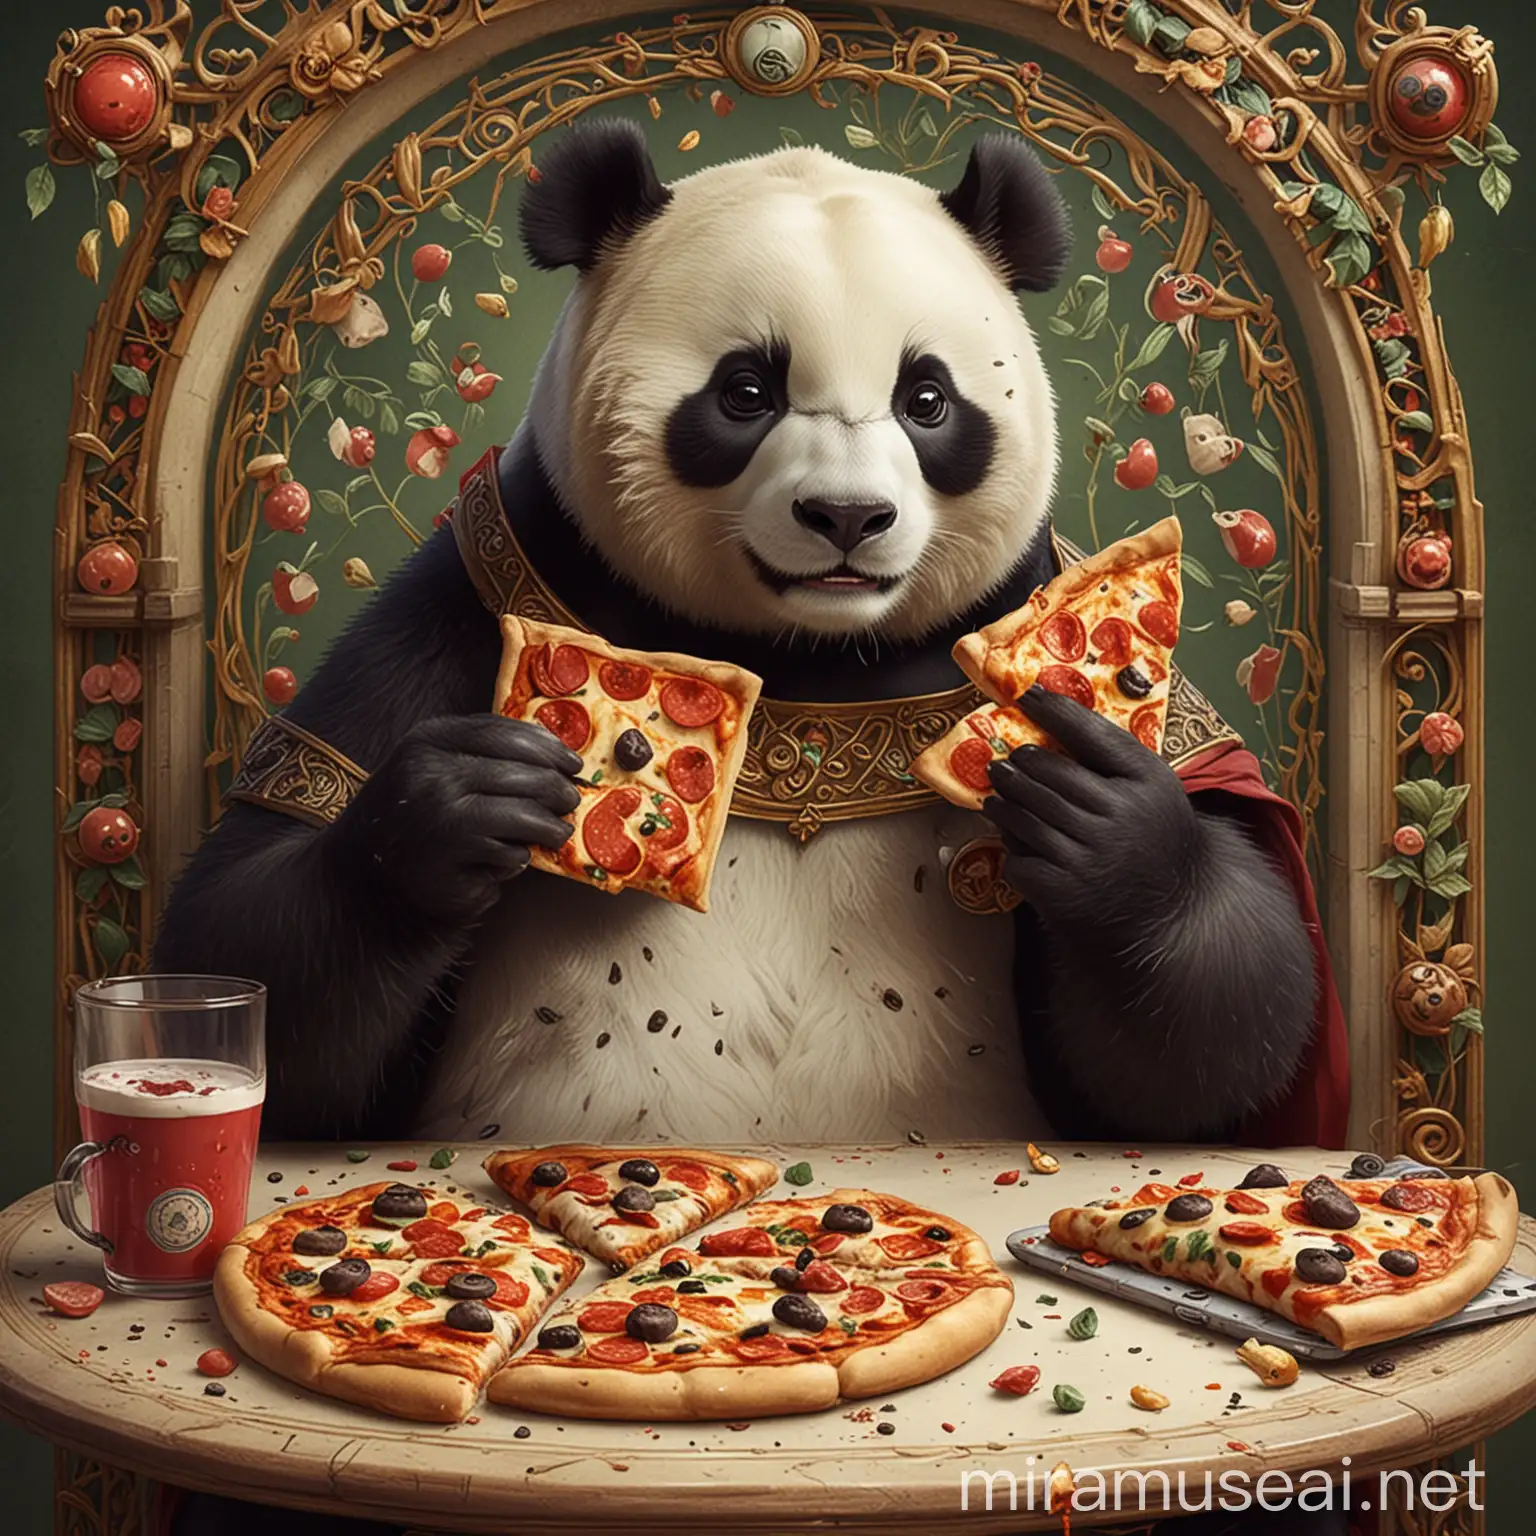 Art Nouveau Panda Enjoying Video Games and Pizza Feast